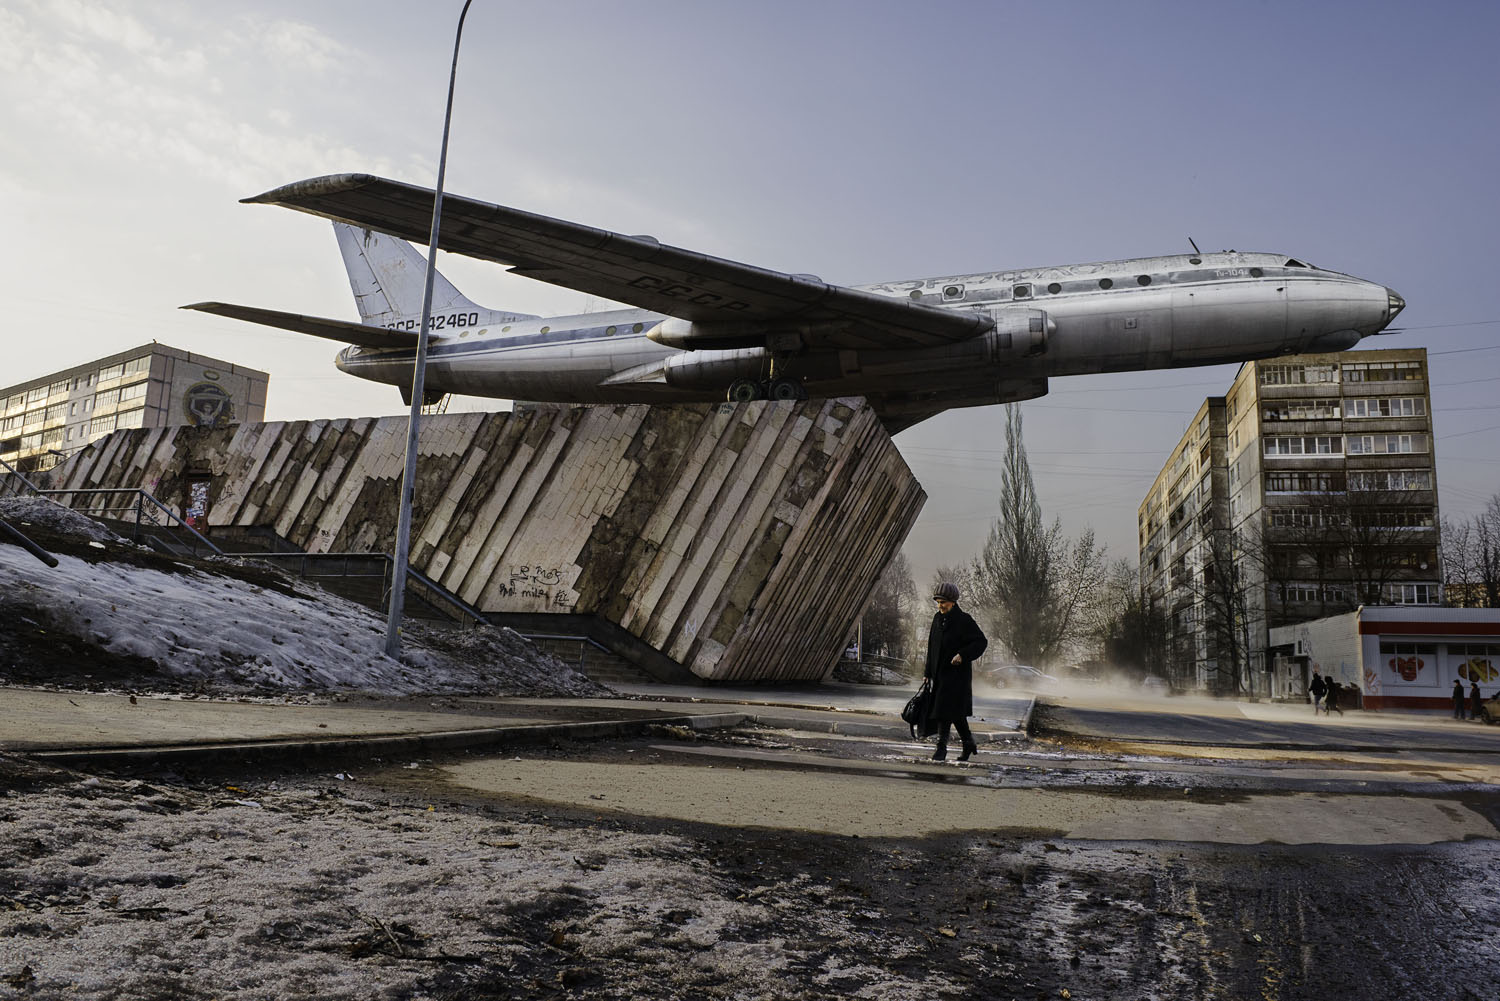 Rybinsk by Steve McCurry. Yaroslavl Oblast, Russia (2015). Image: Magnum Photos 